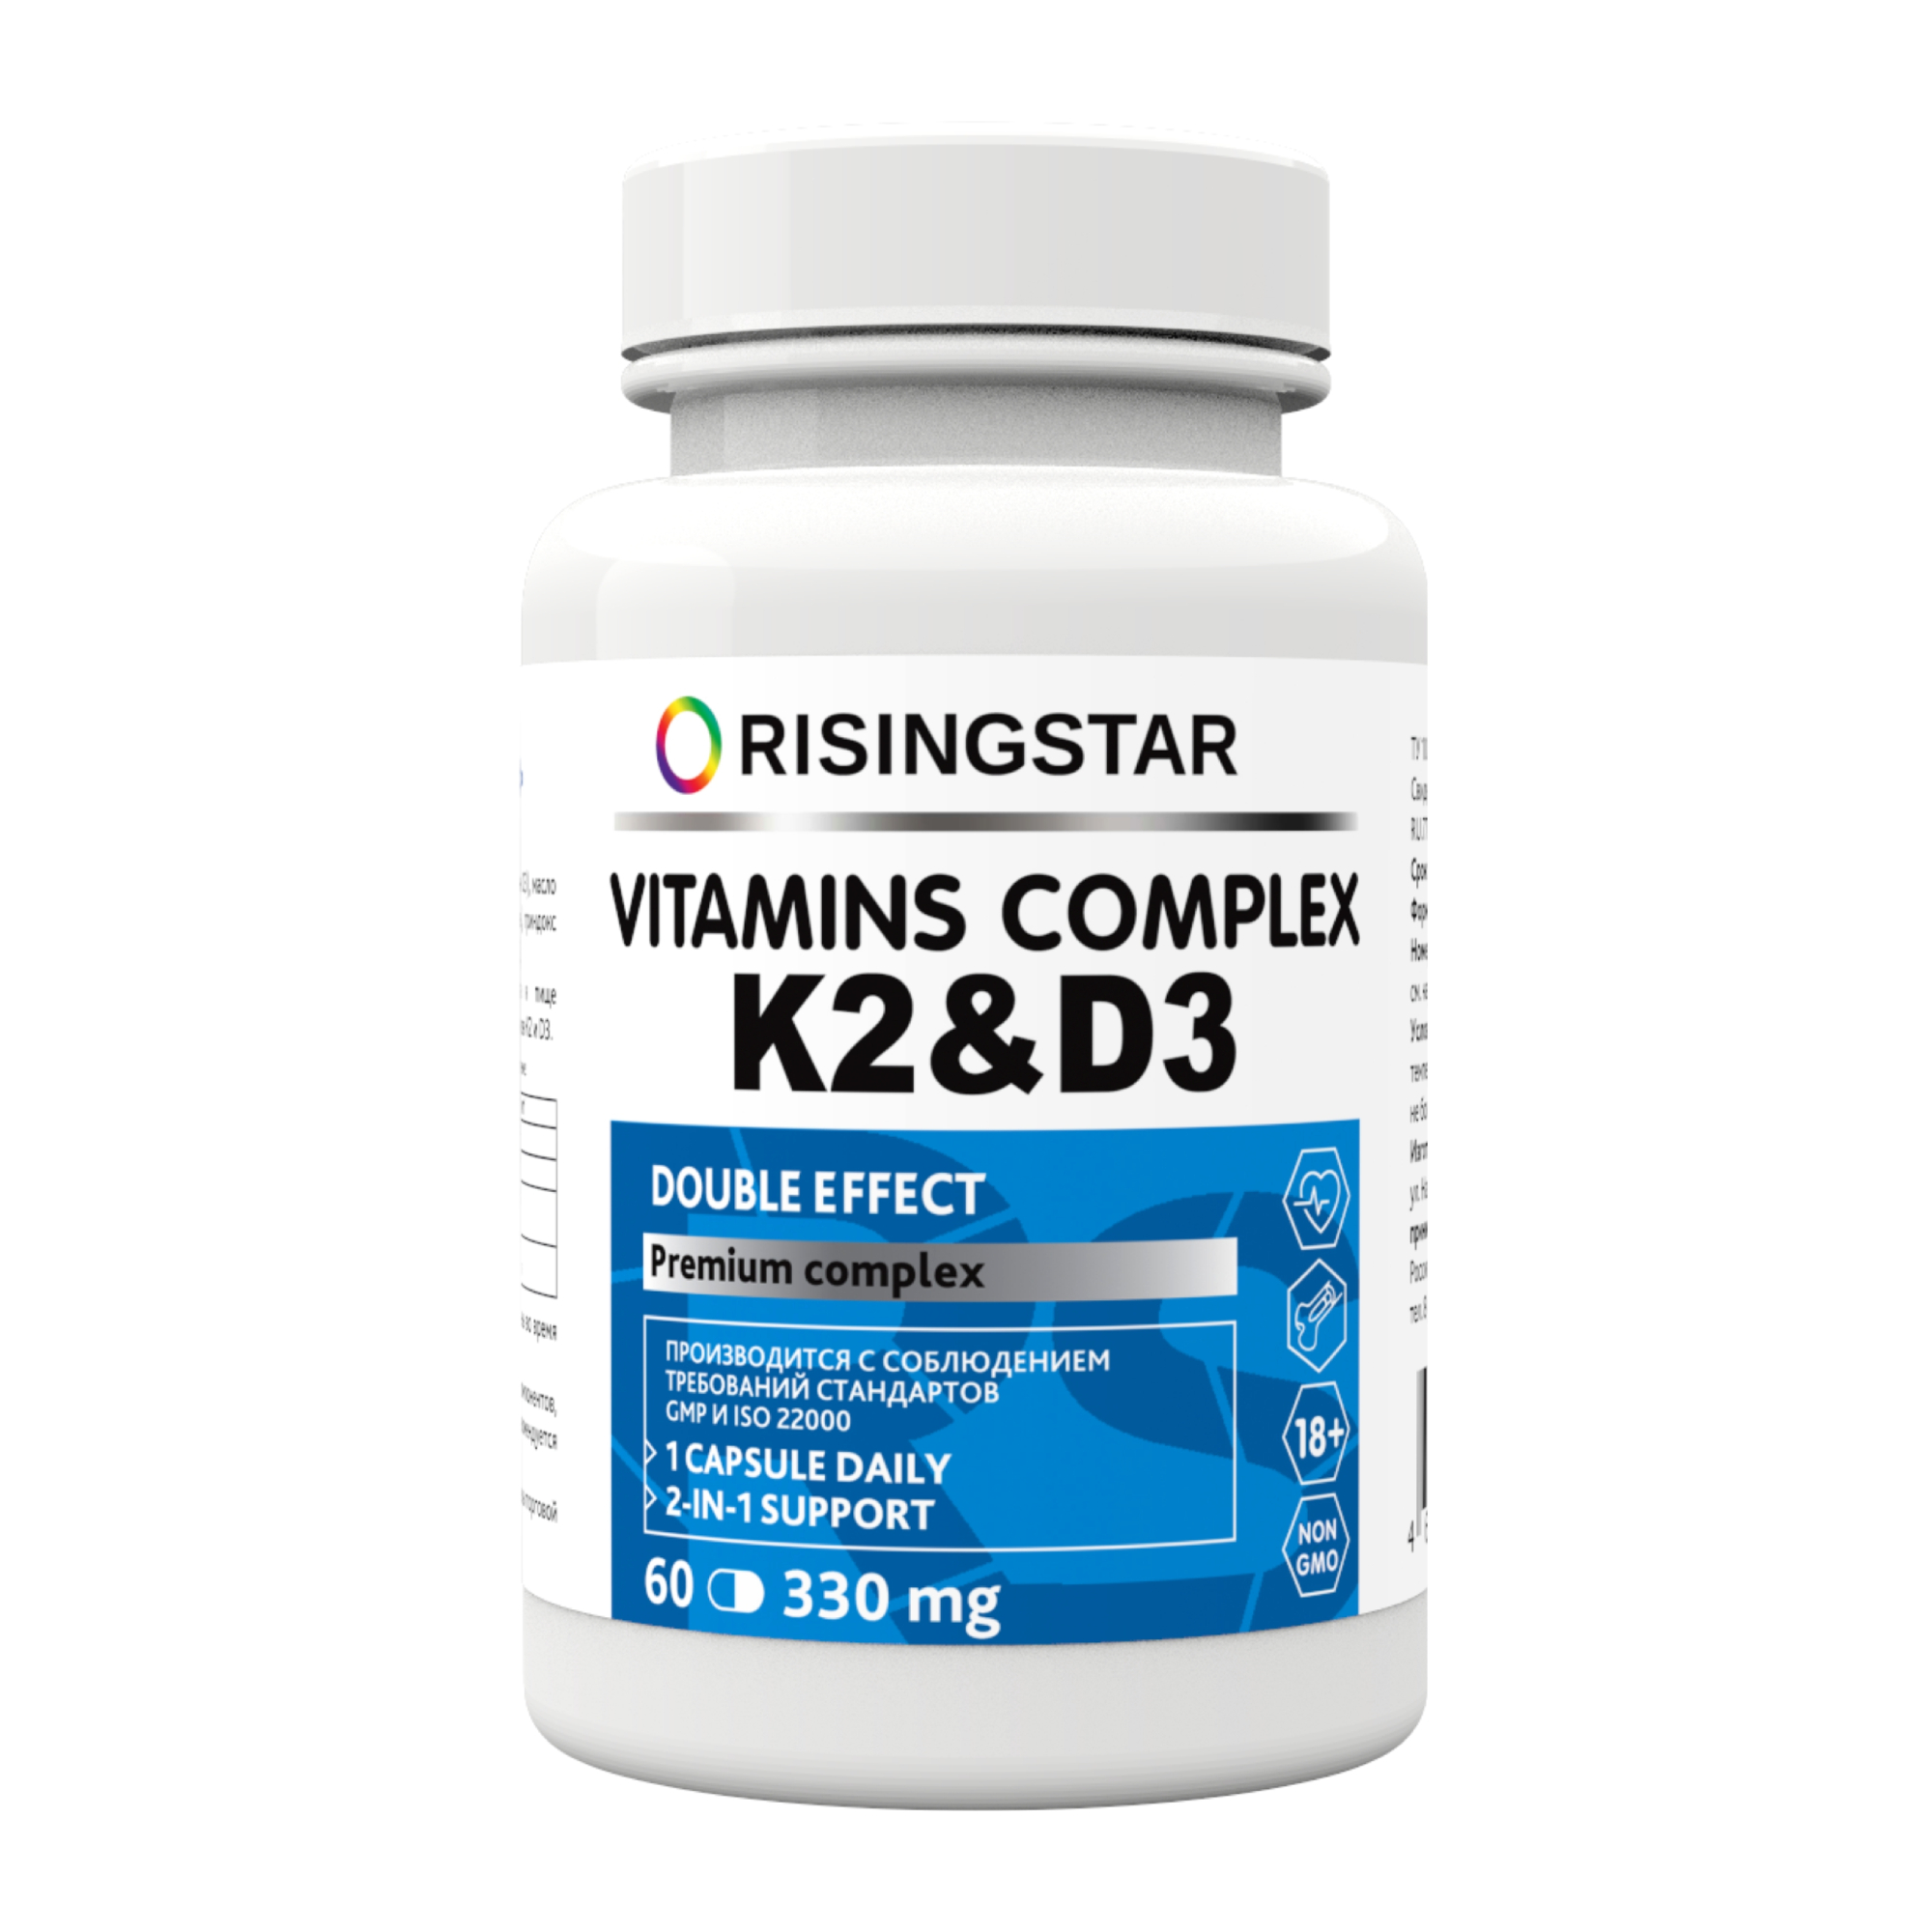 БАД Risingstar комплекс витаминов K2 и D3 60 таблеток, 60 г бад risingstar комплекс витаминов адаптогены с омега 3 60 таблеток 100 г